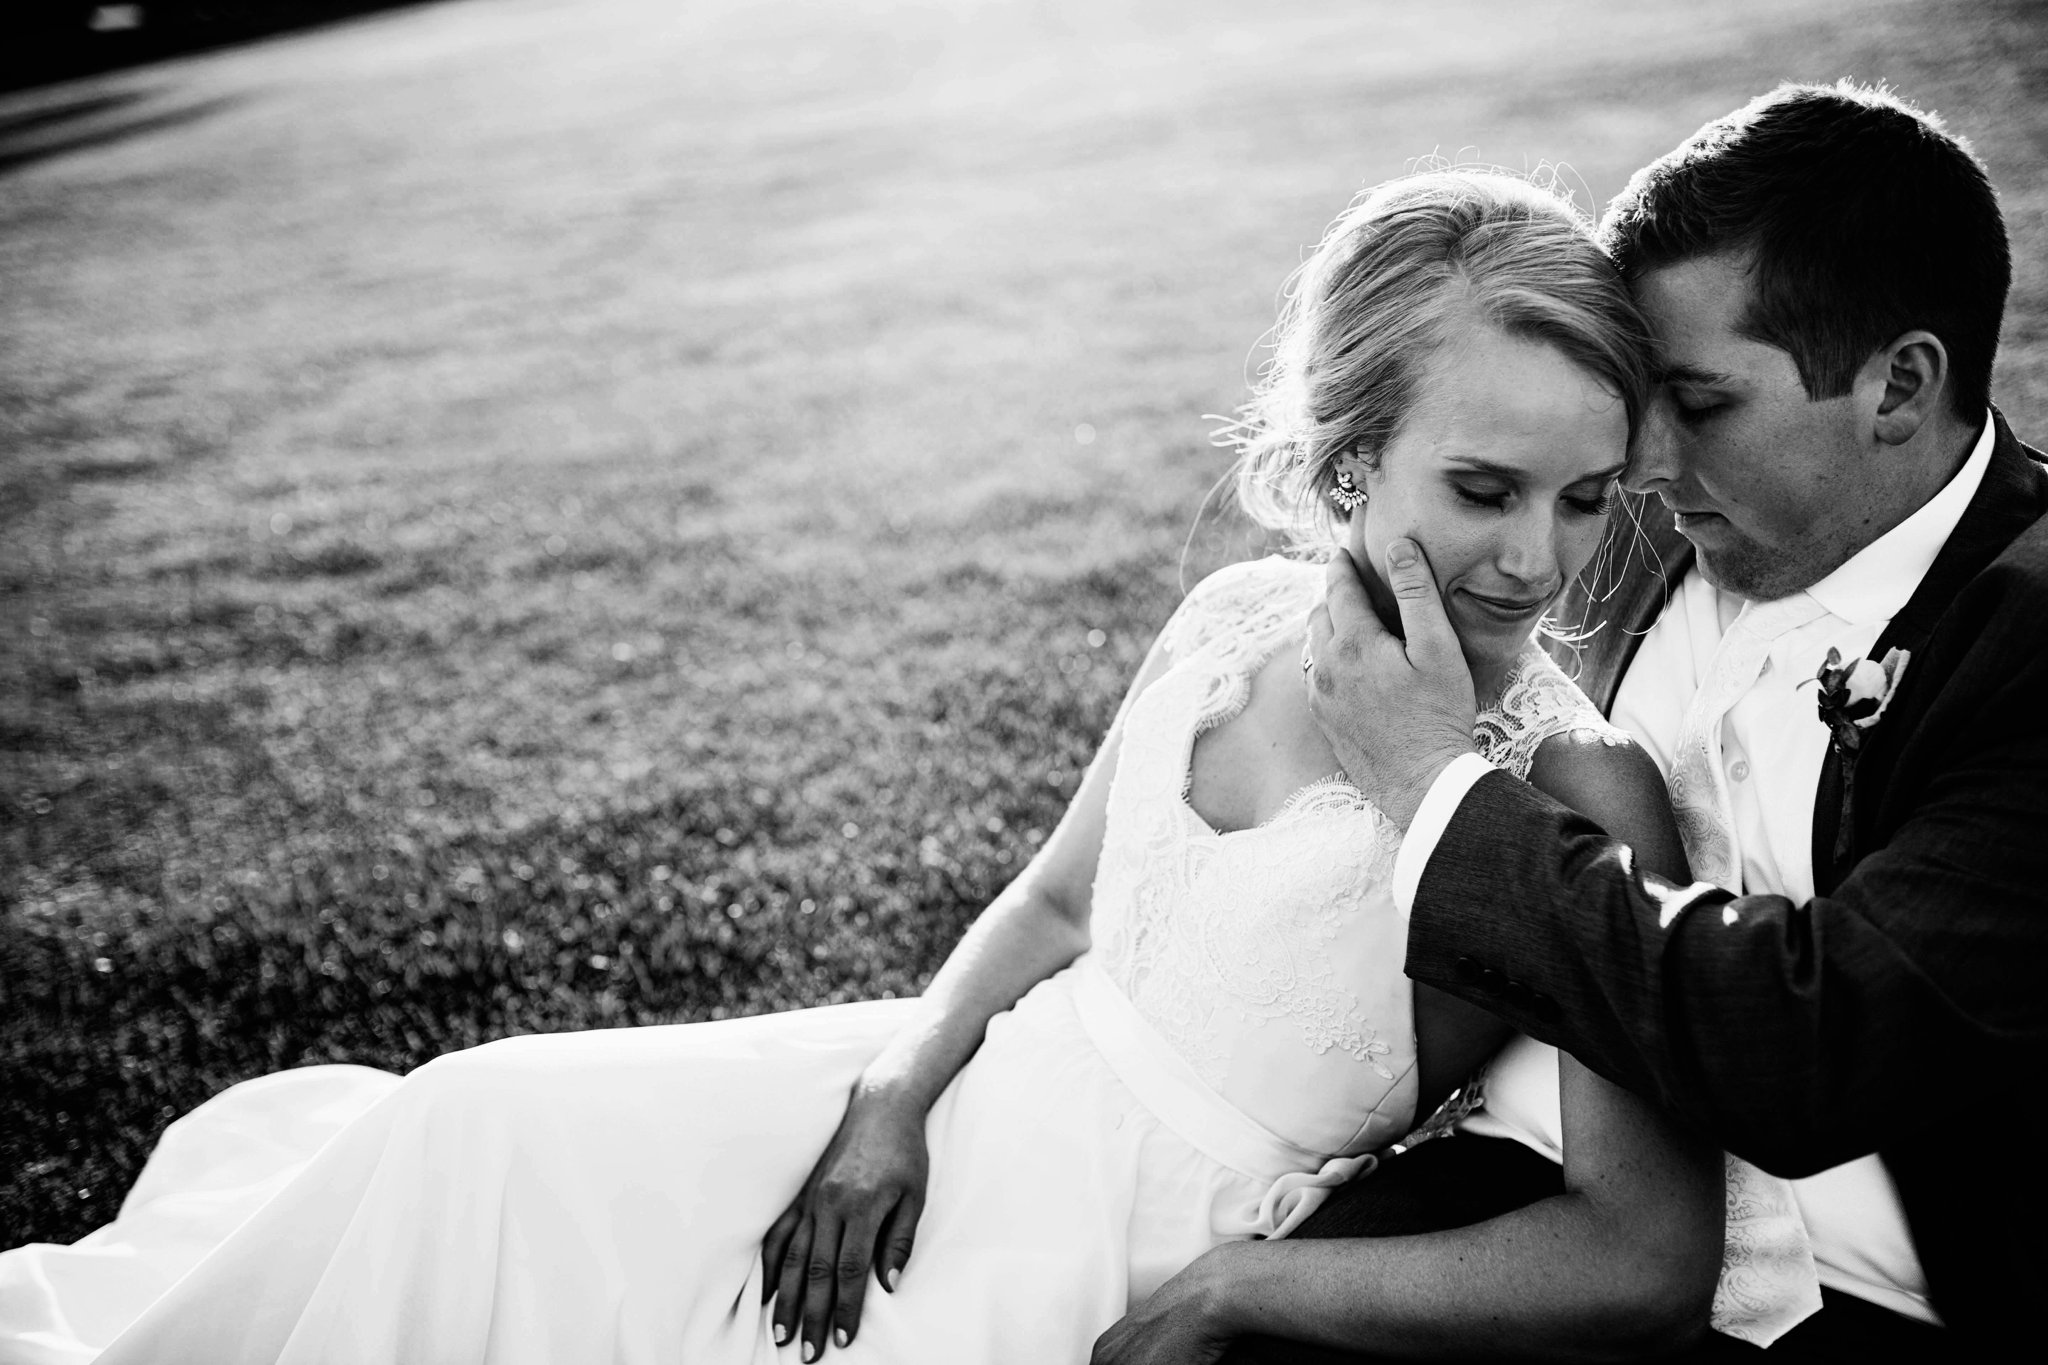 Sioux Falls Wedding Photos | Destination Photographer | Felicia The Photographer | Brandon Golf Club | Bride and Groom | Golden Hour | Black and White | Romantic